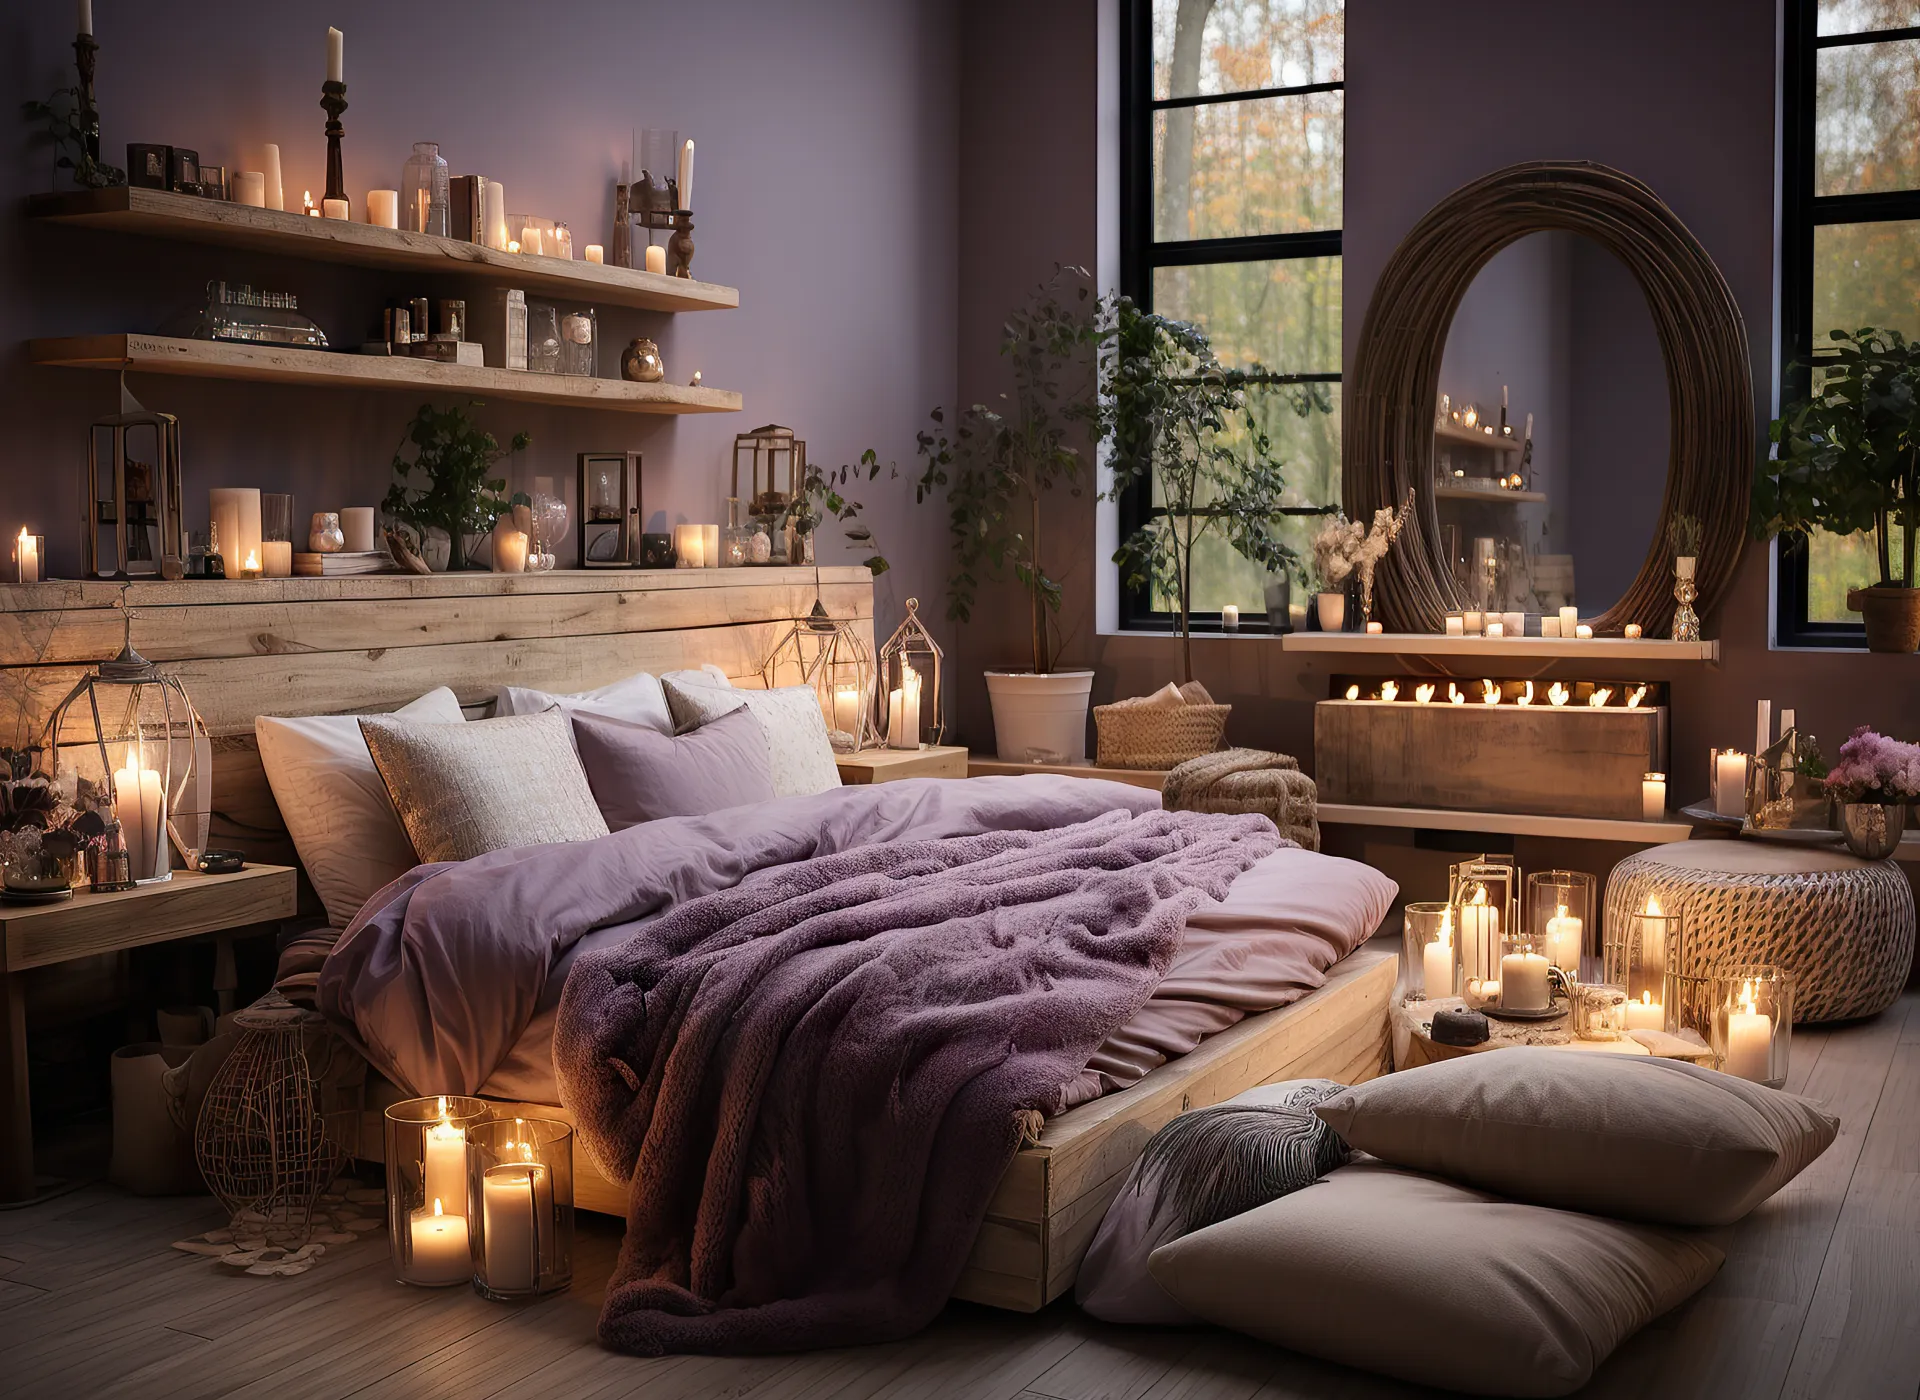 Candlelit ambience bedroom decor